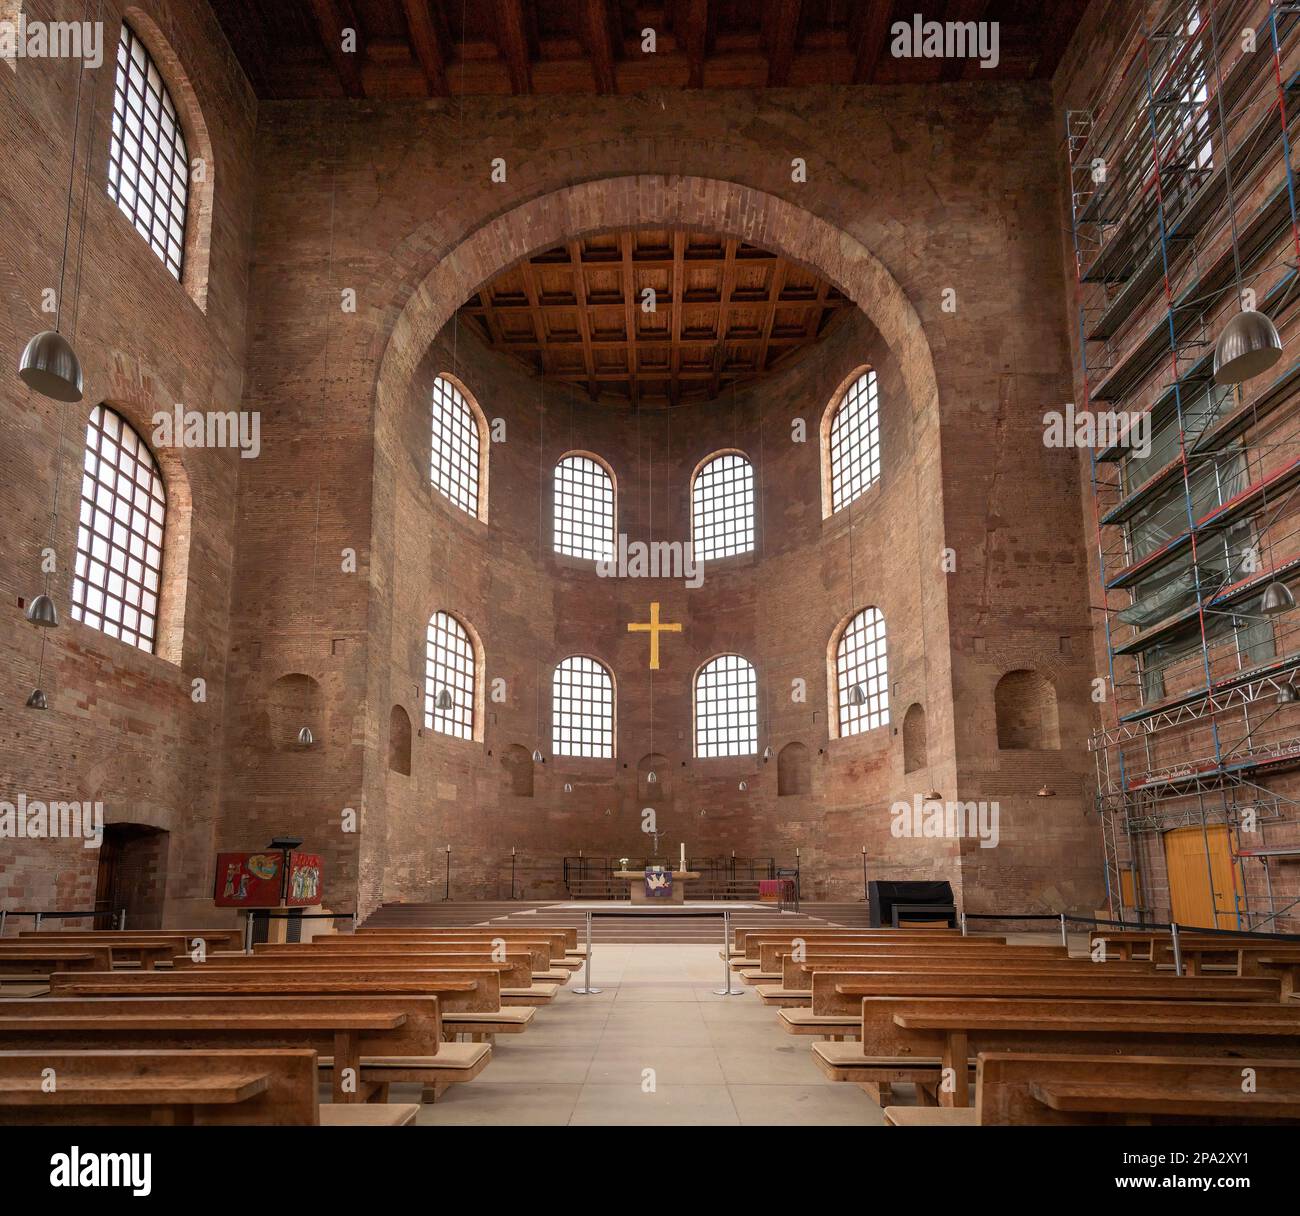 Aula Palatina (Basilica of Constantine) Interior - Trier, Germany Stock Photo